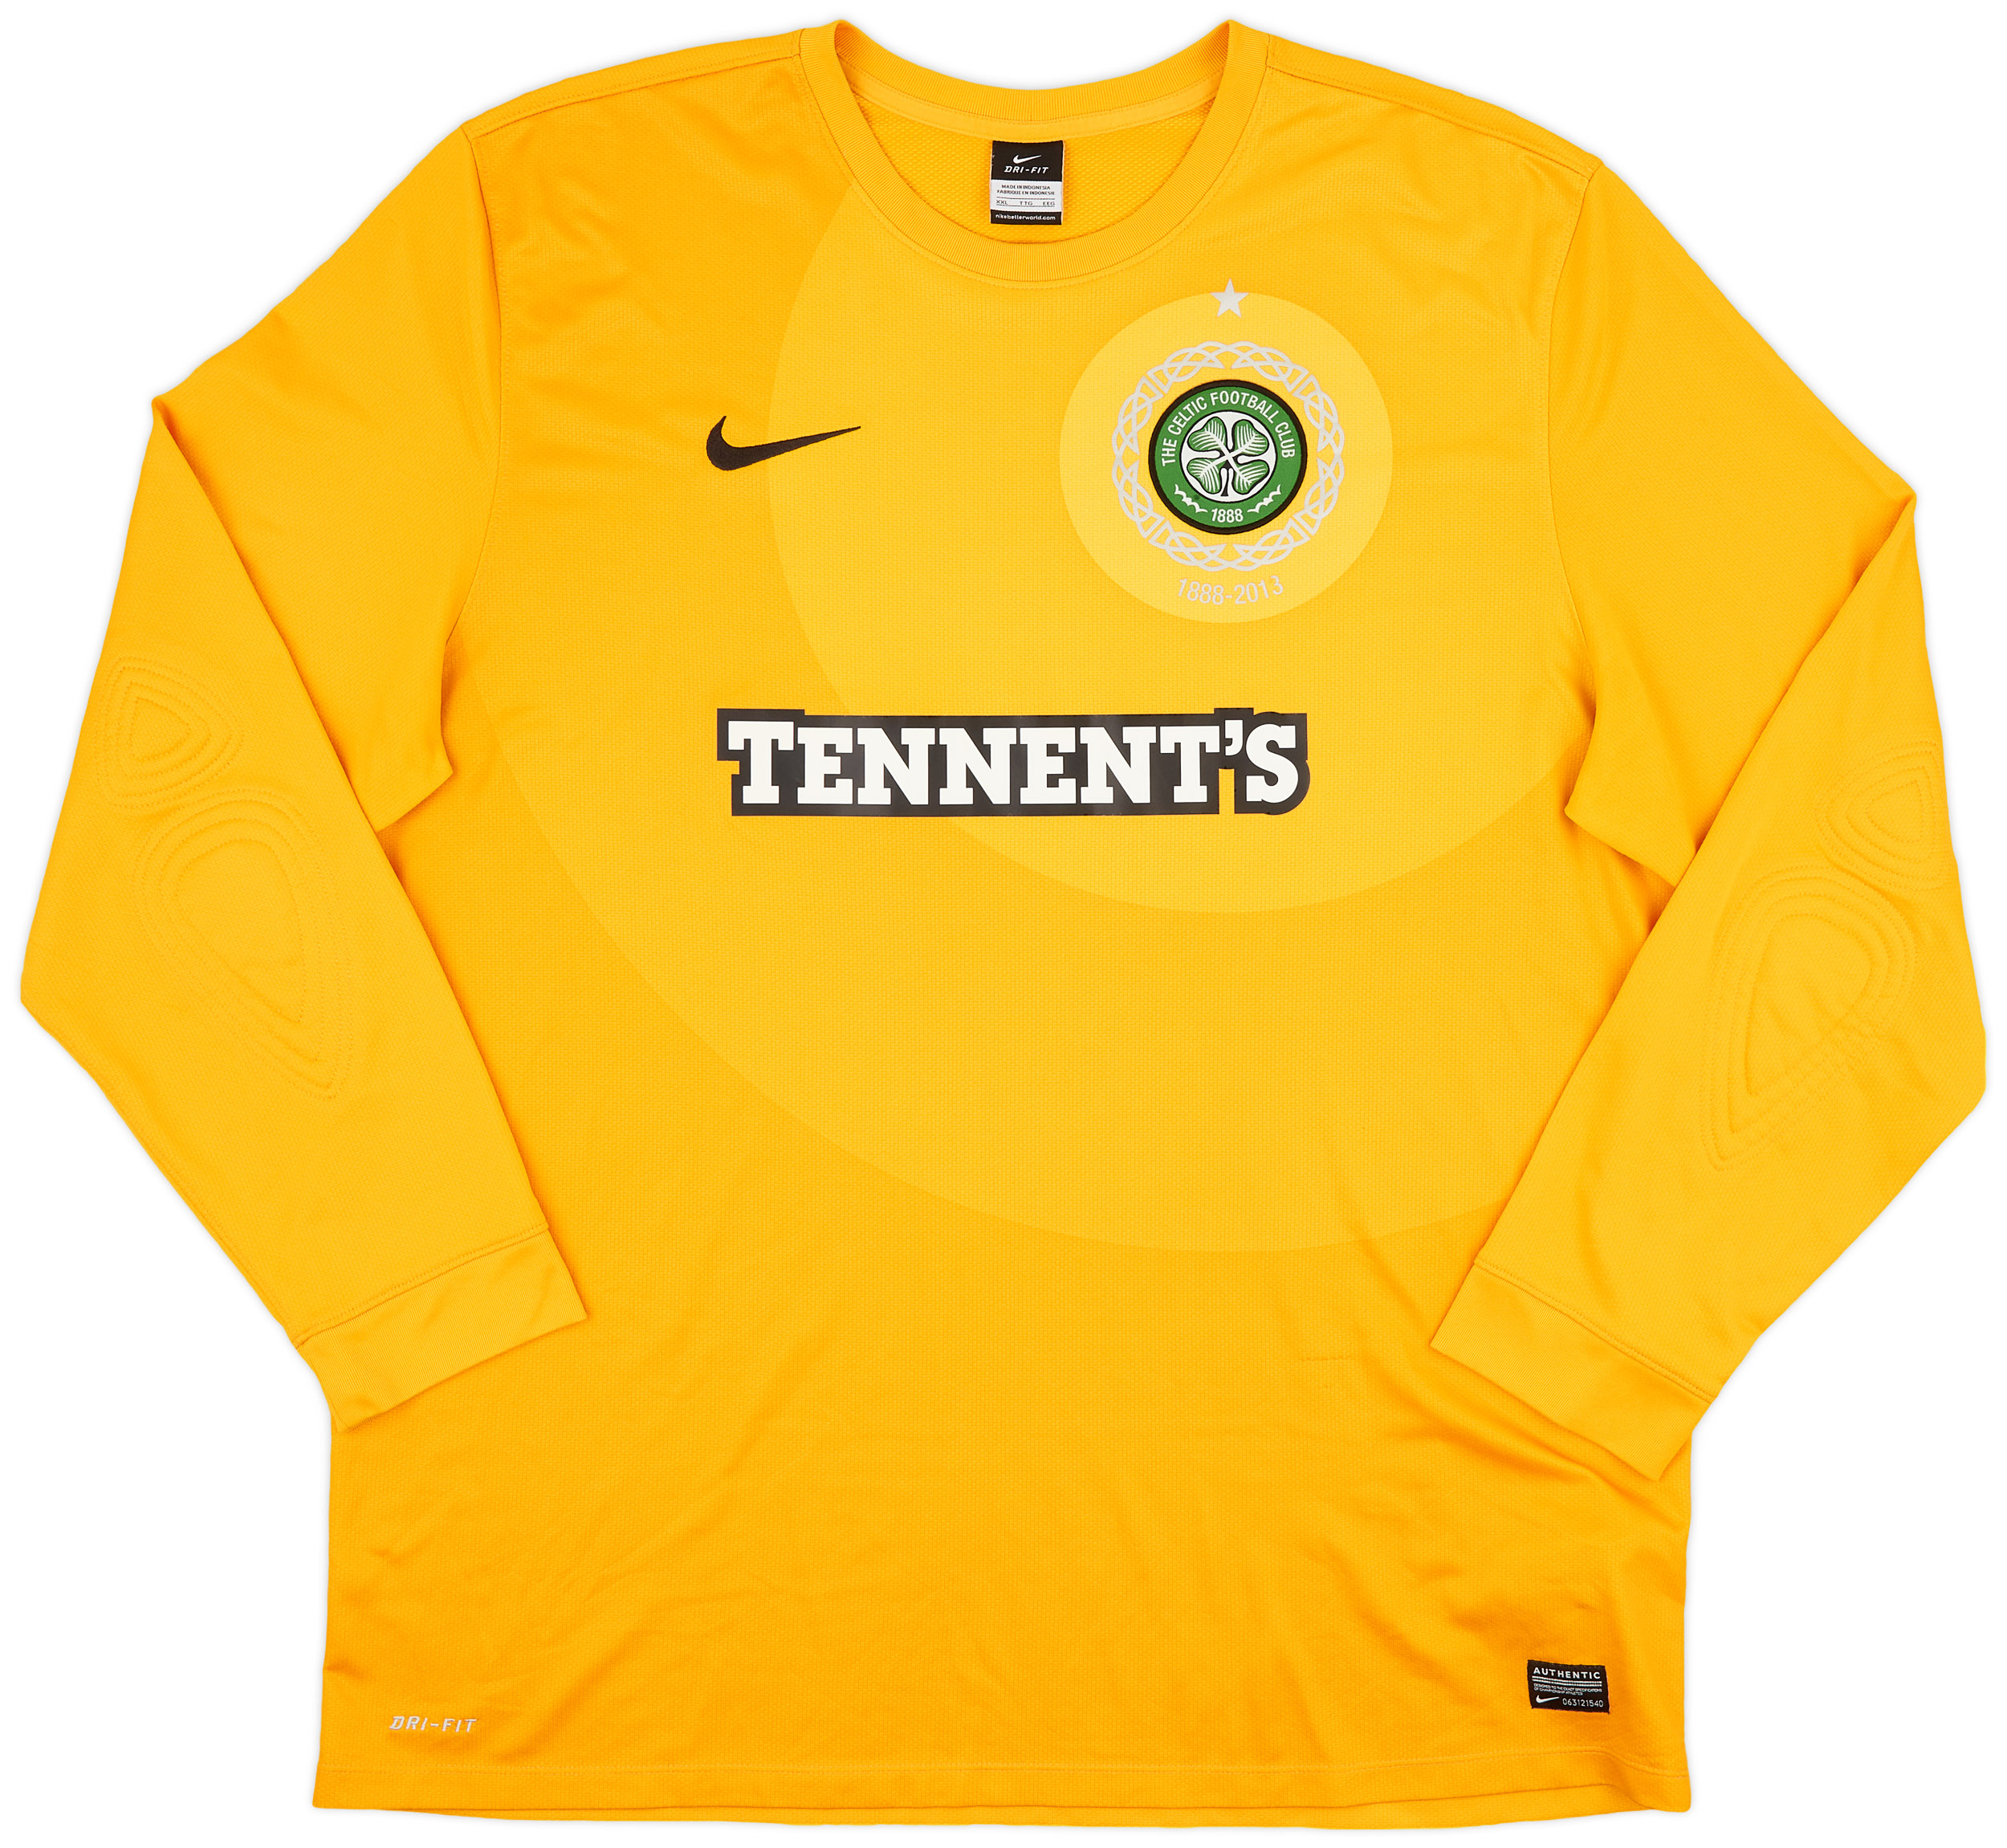 Celtic 12/13 Nike 125th Anniversary Home Kit - Football Shirt